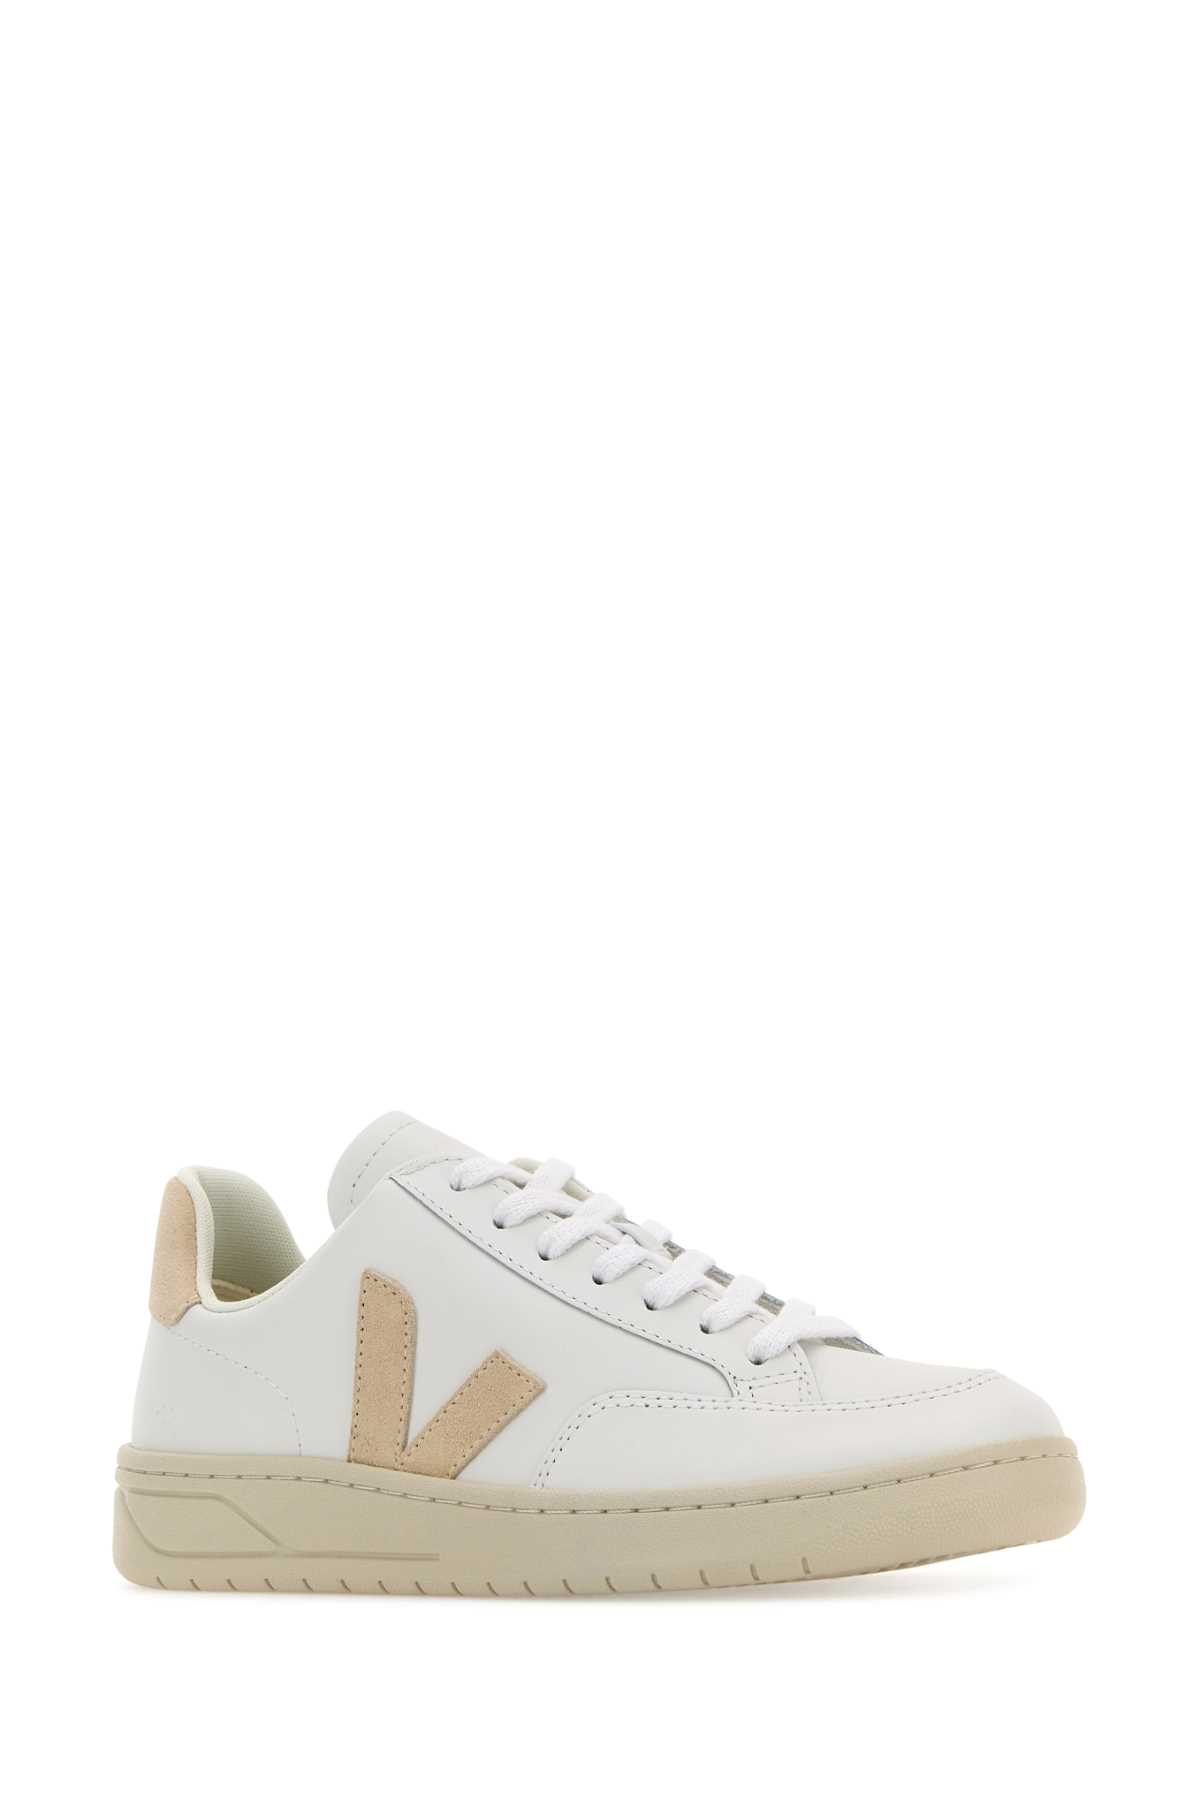 Veja White Leather V-12 Sneakers In Extrawhitesable